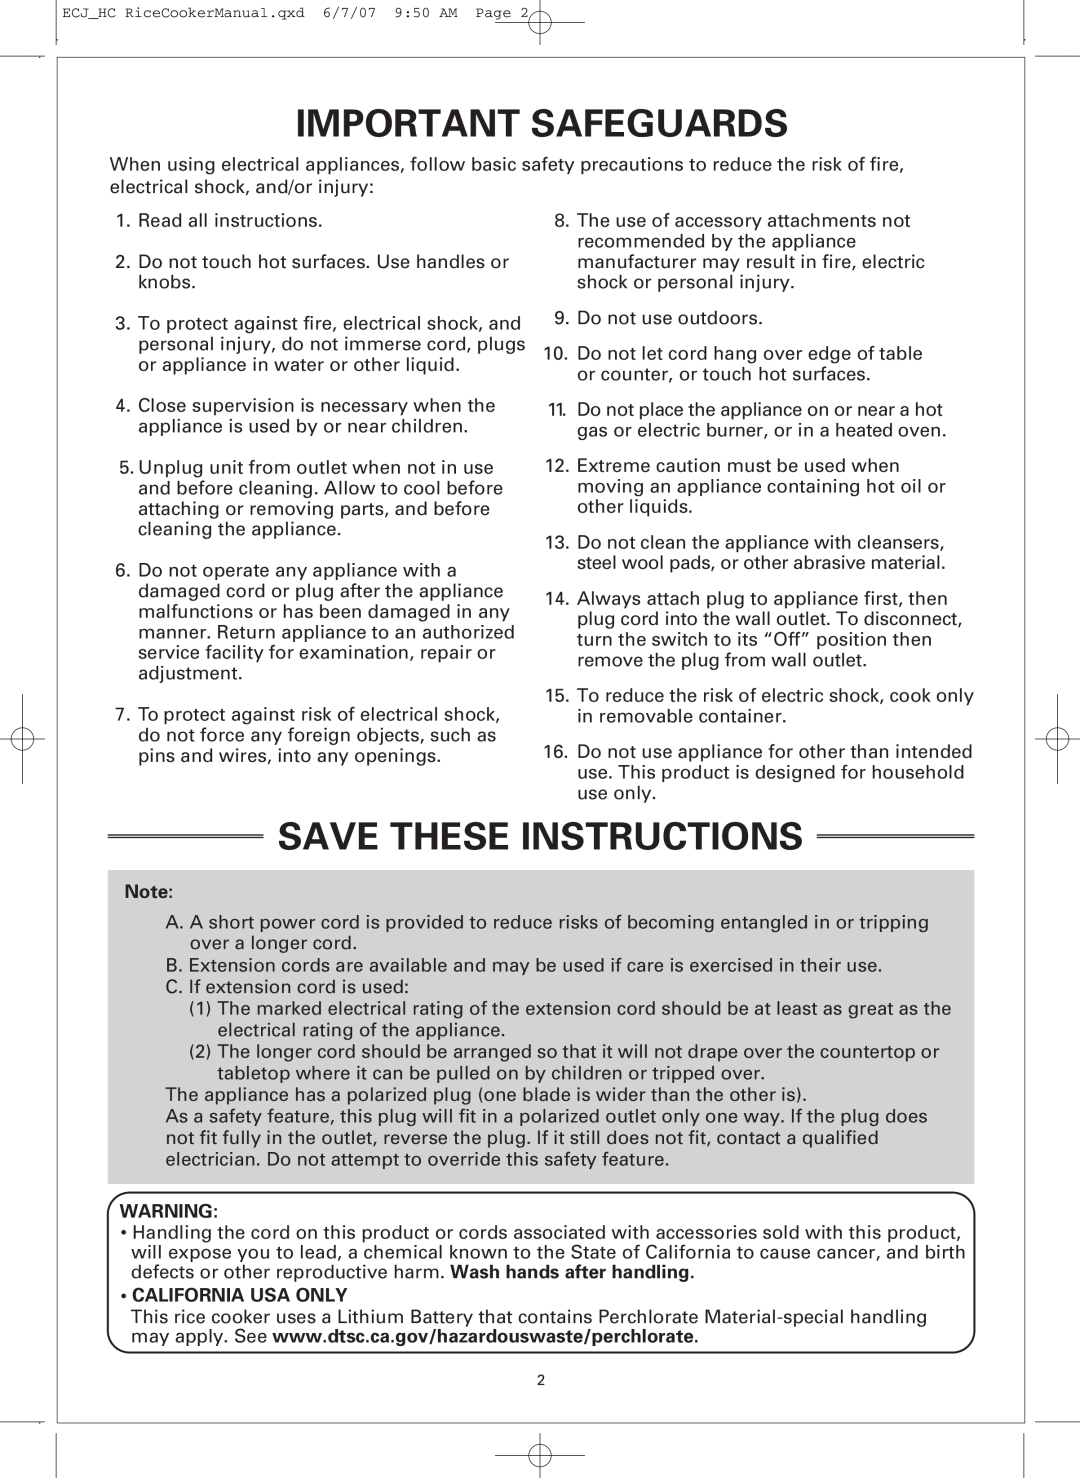 Sanyo ECJ-HC55H, ECJ-HC100H warranty Important Safeguards, Save These Instructions, California Usa Only 